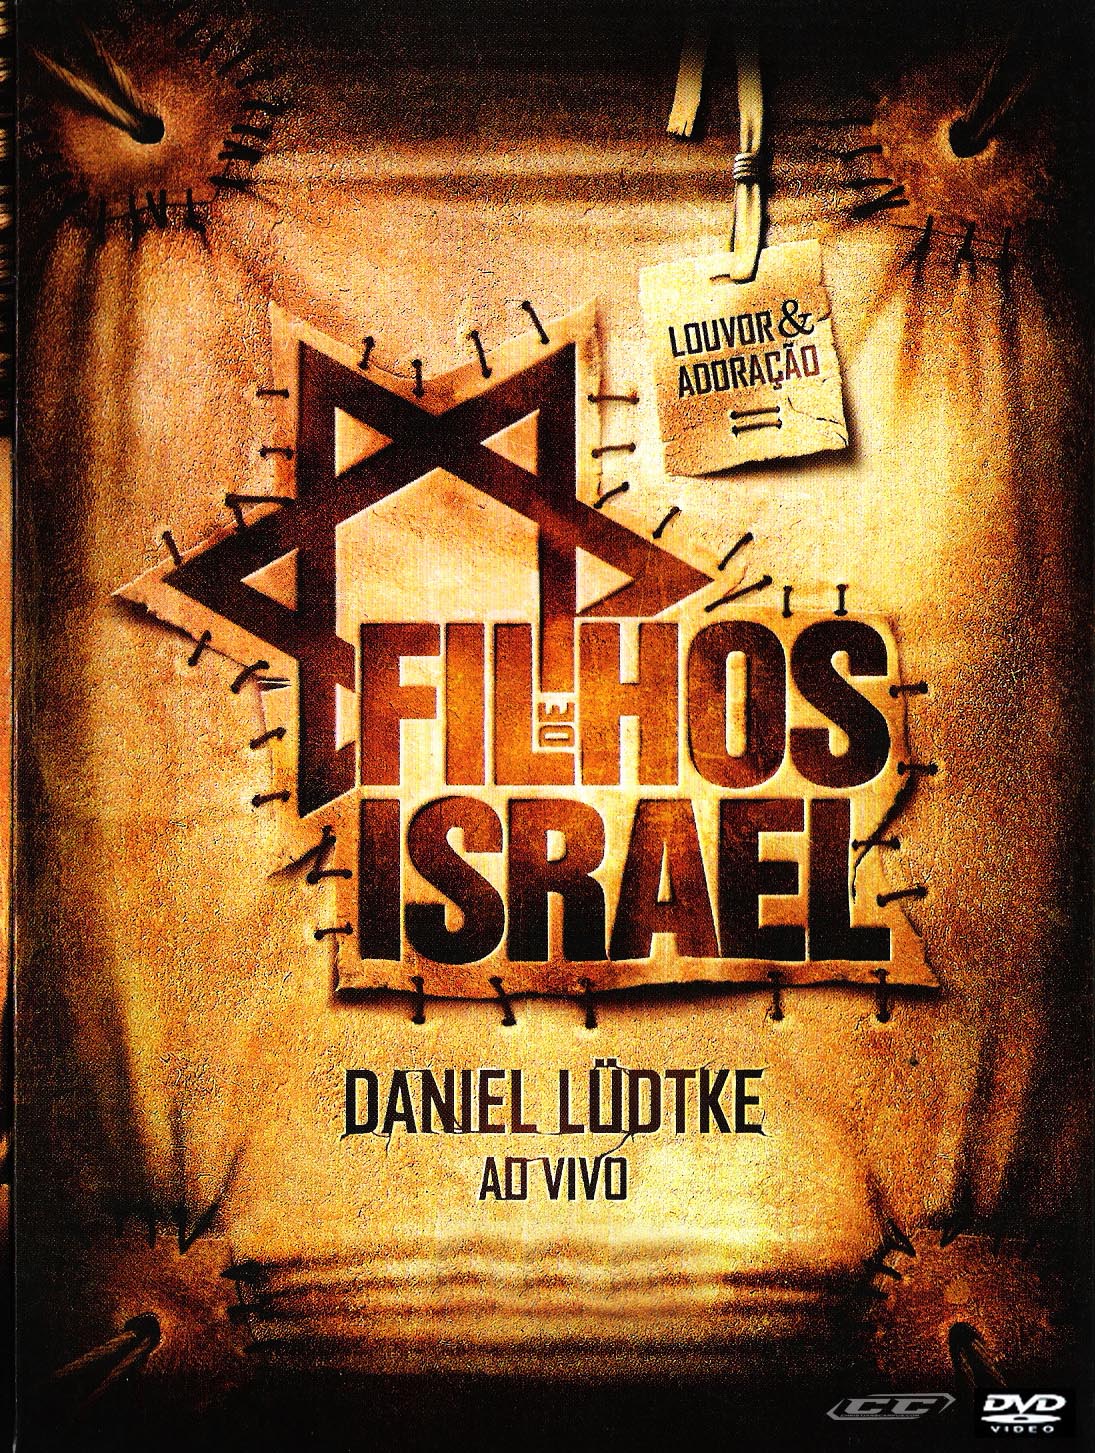 Daniel Ludtke - Filhos de Israel 2012 Portugese Christian Album Download